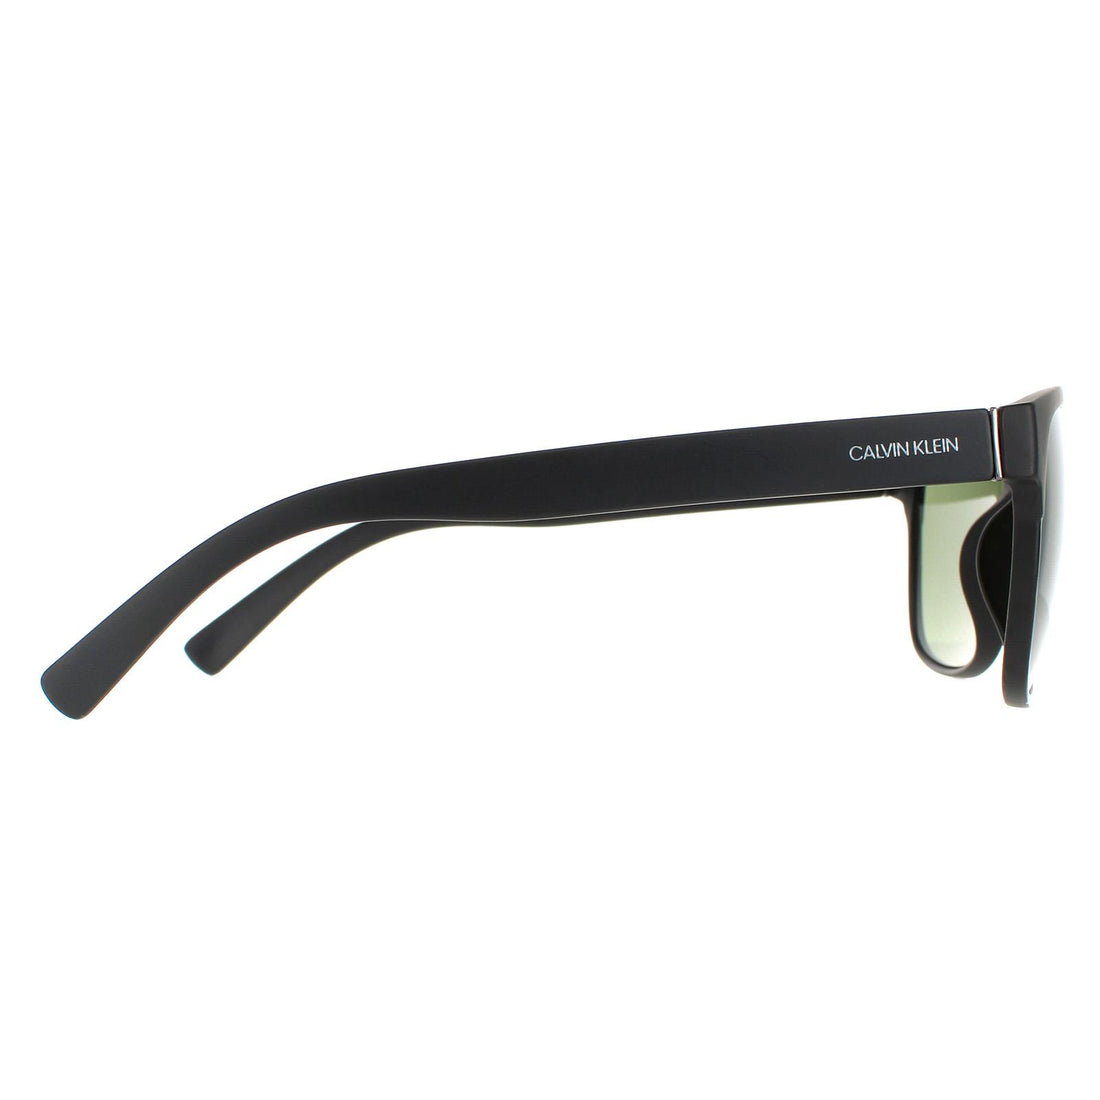 Calvin Klein CK20523S Sunglasses